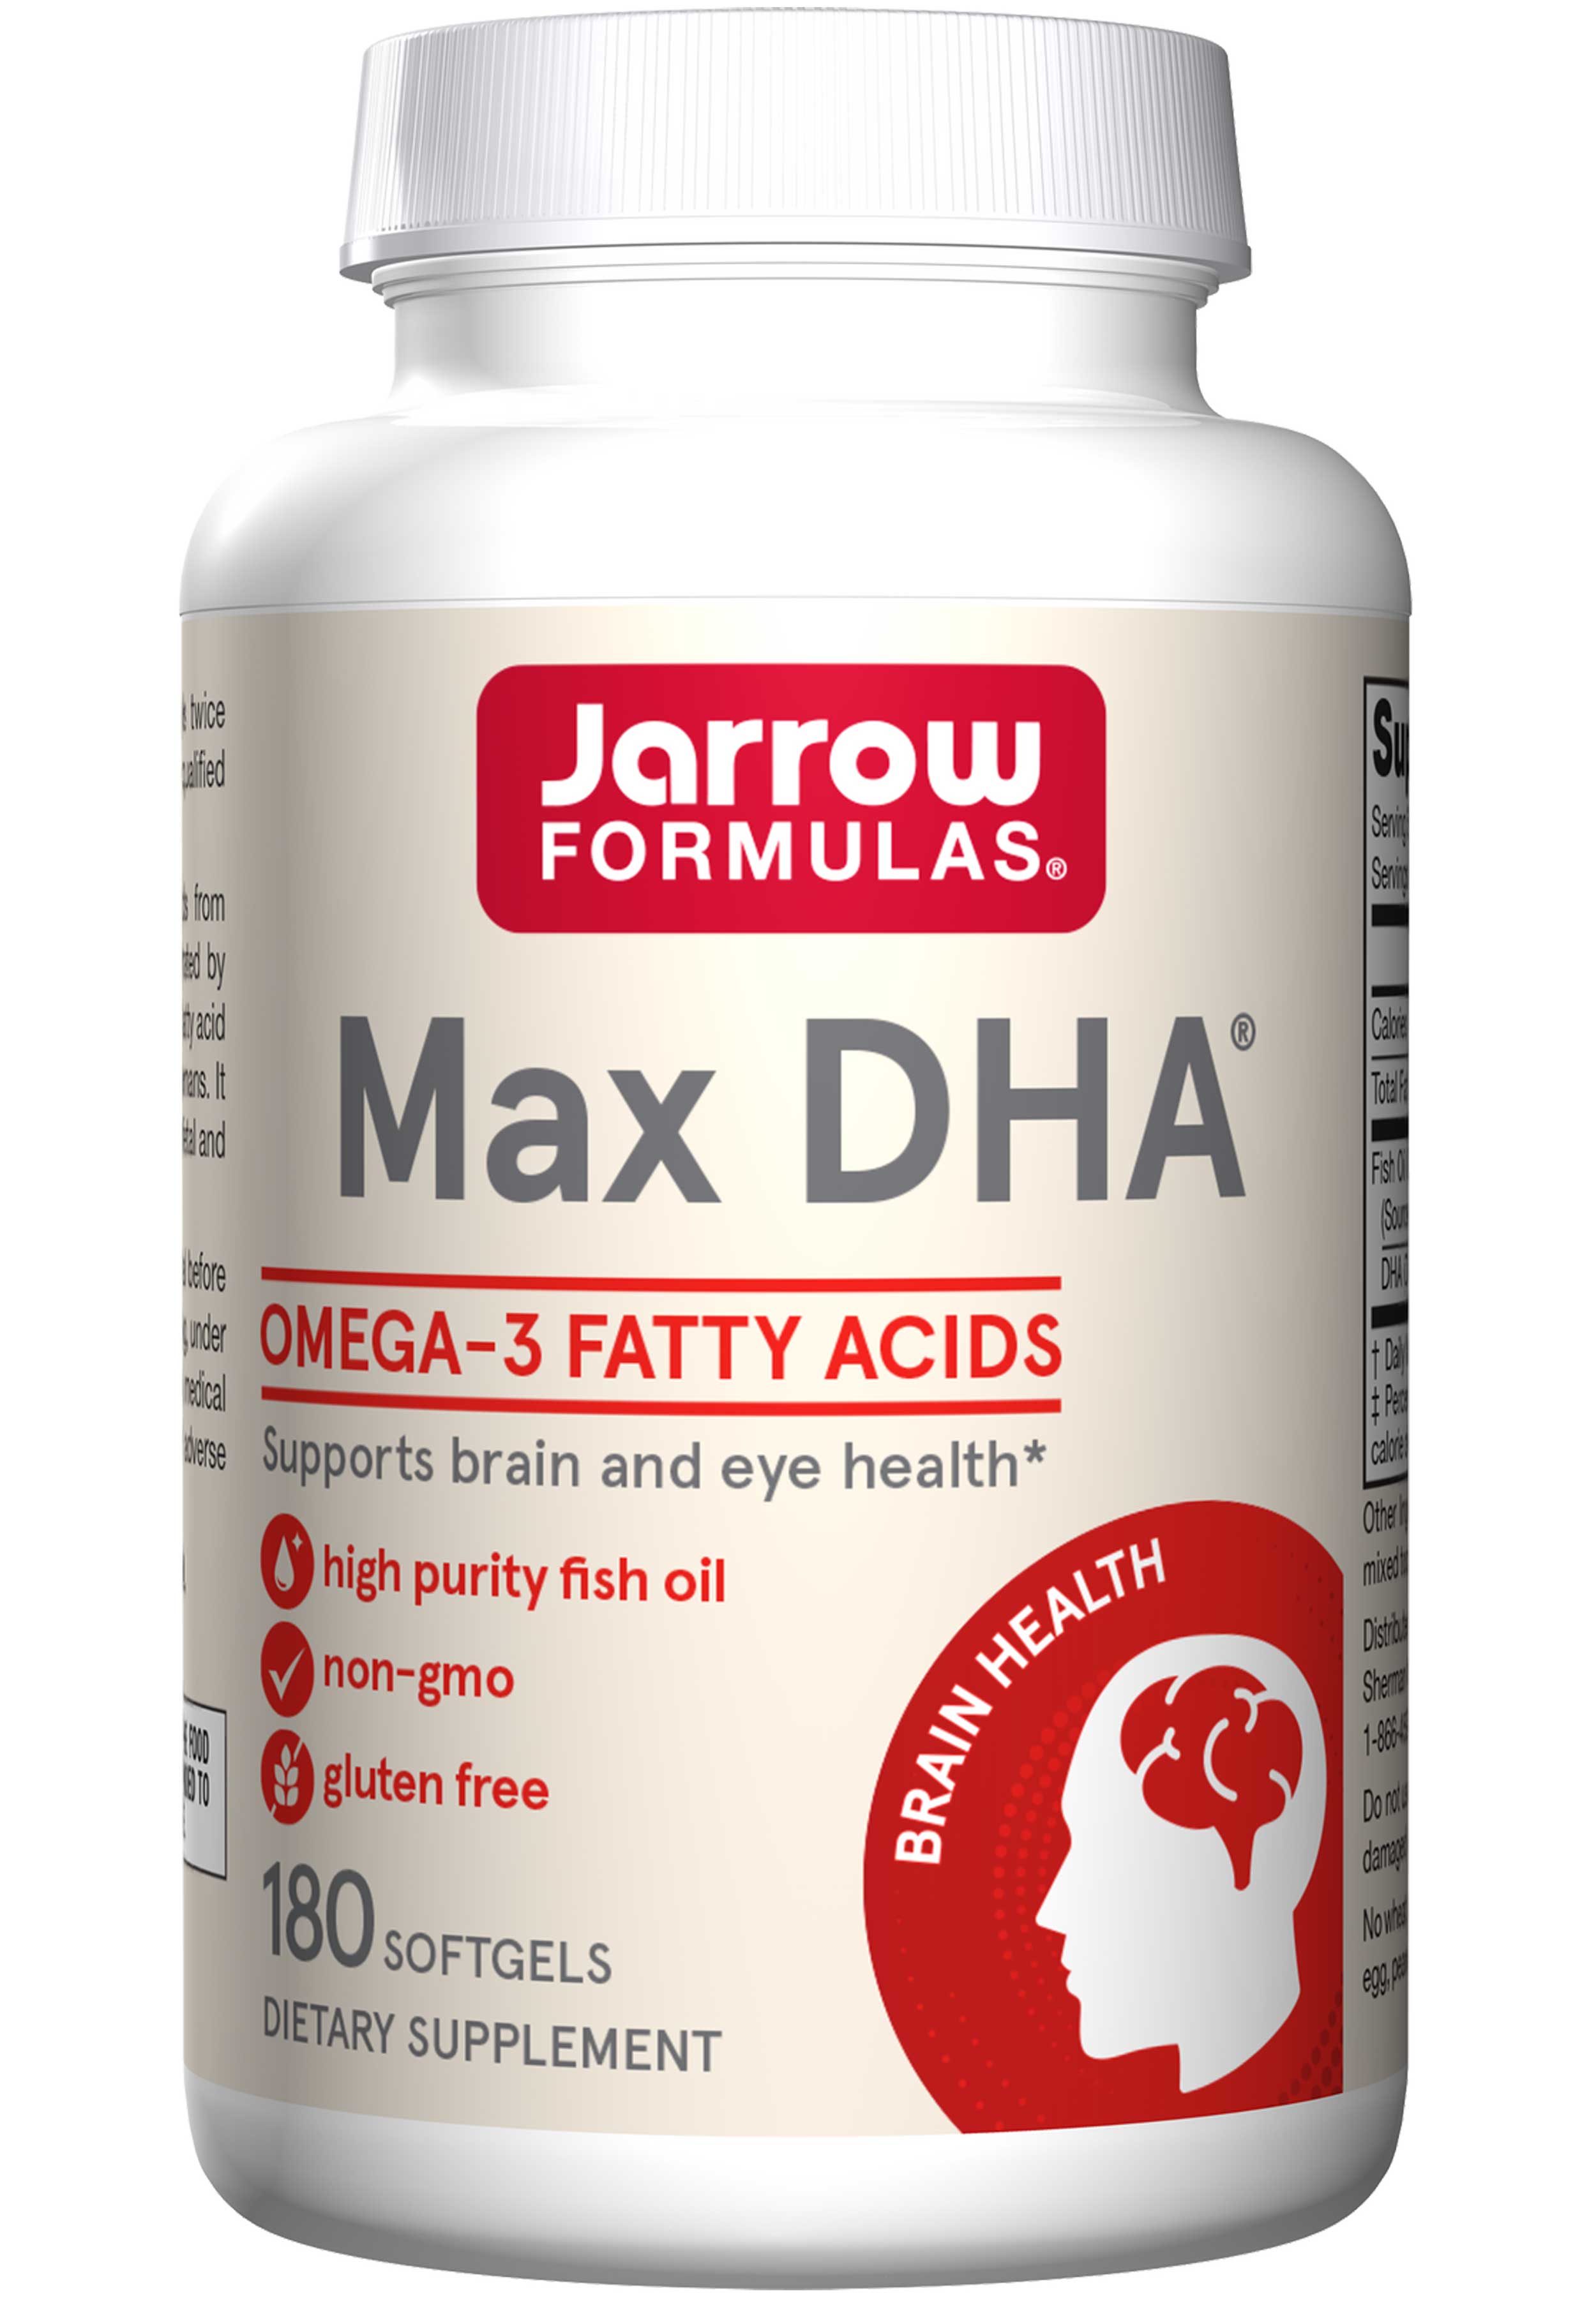 Jarrow Formulas Max DHA